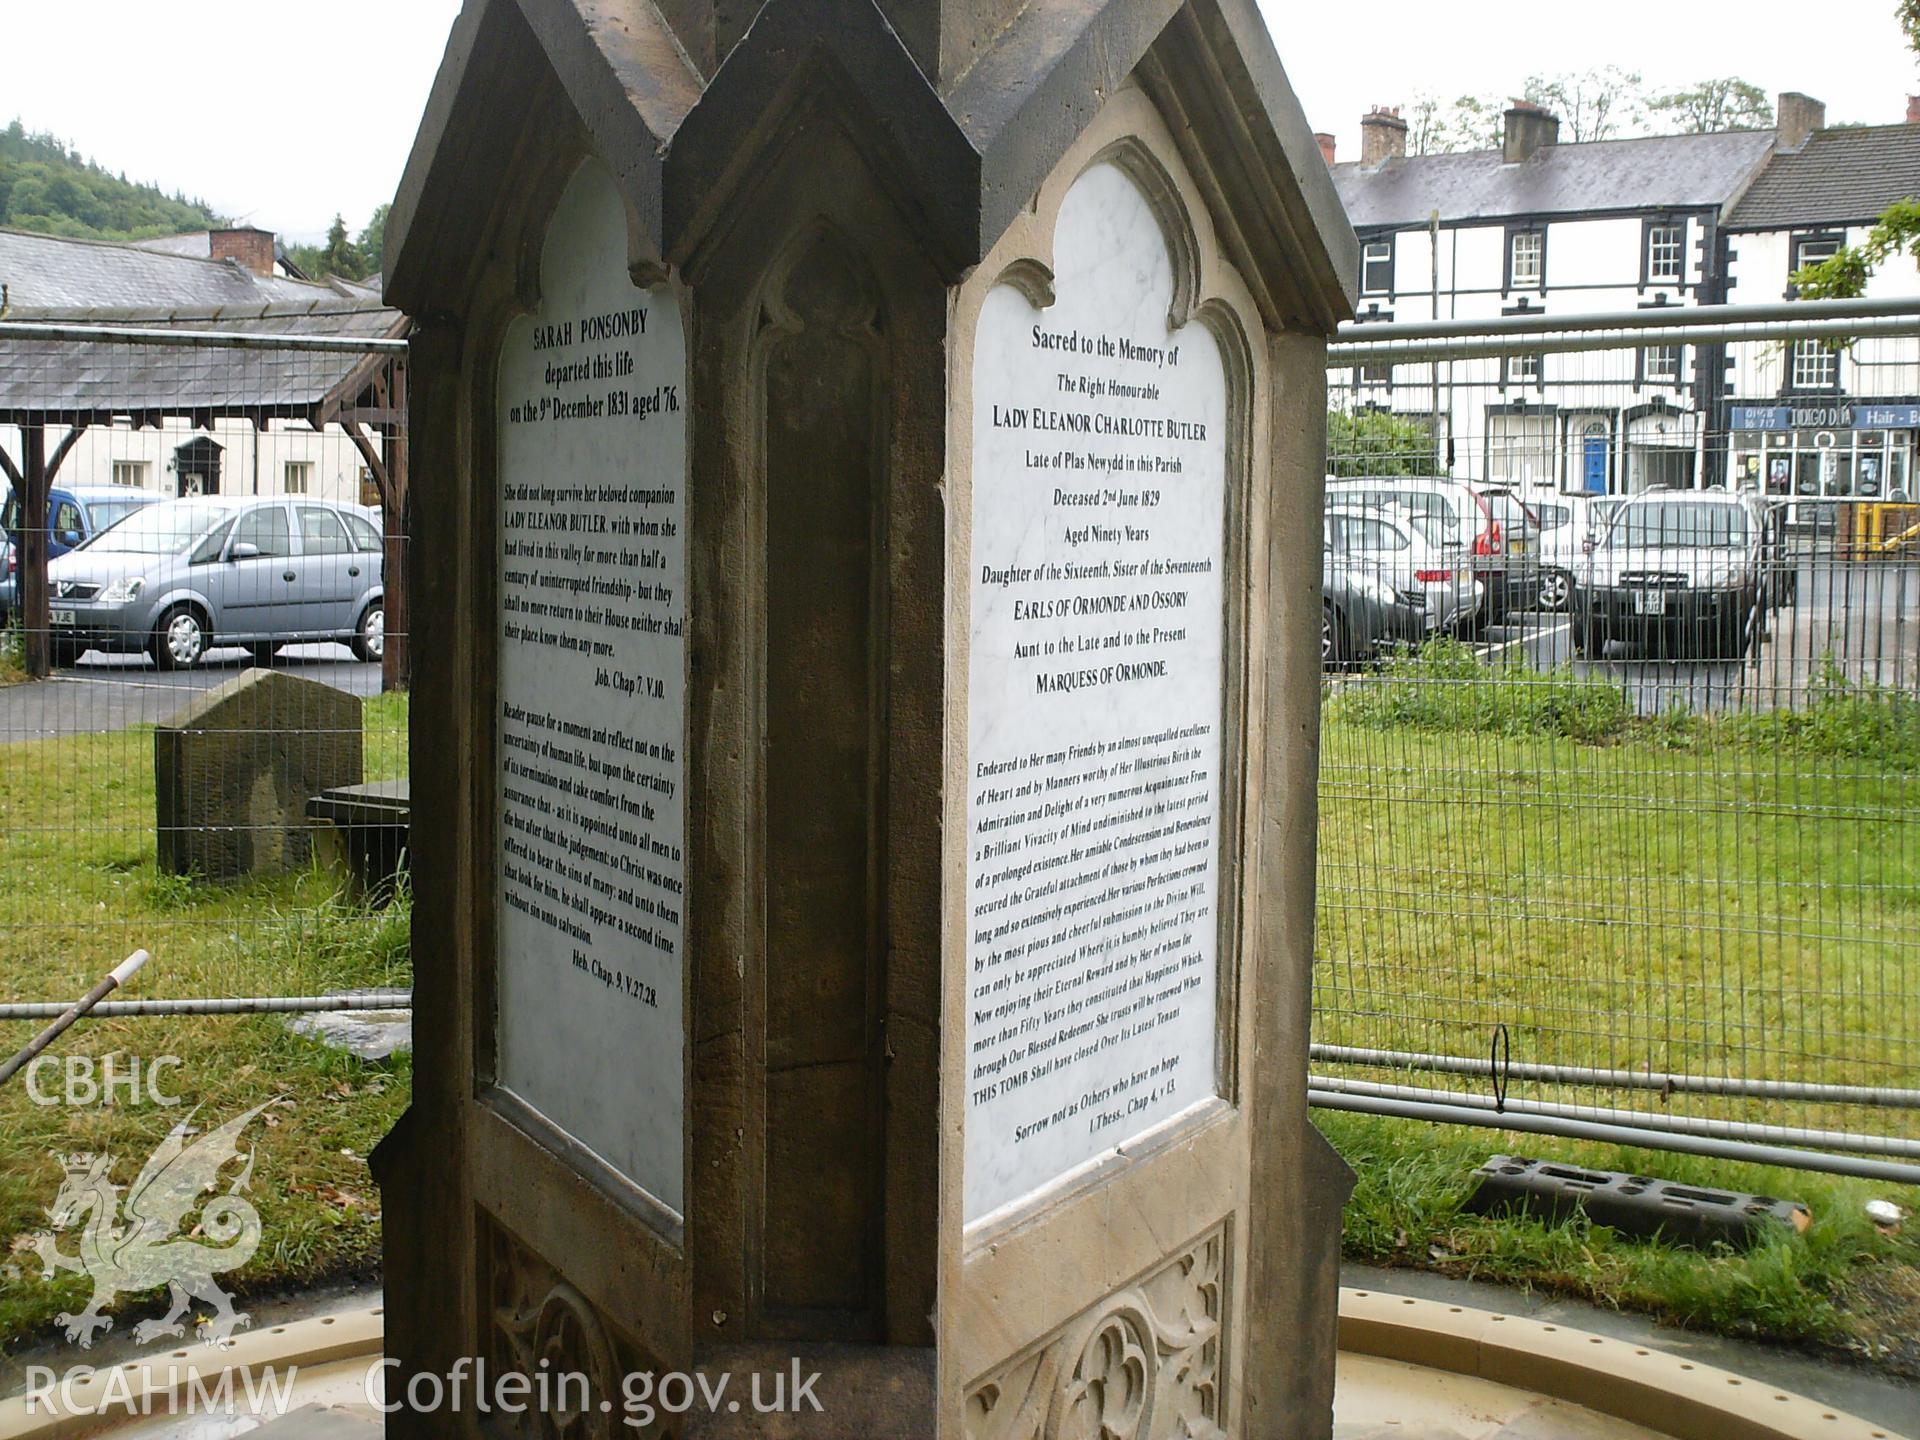 Digital image showing replica memorial plaques for Eleanor Butler and Sarah Ponsonby.